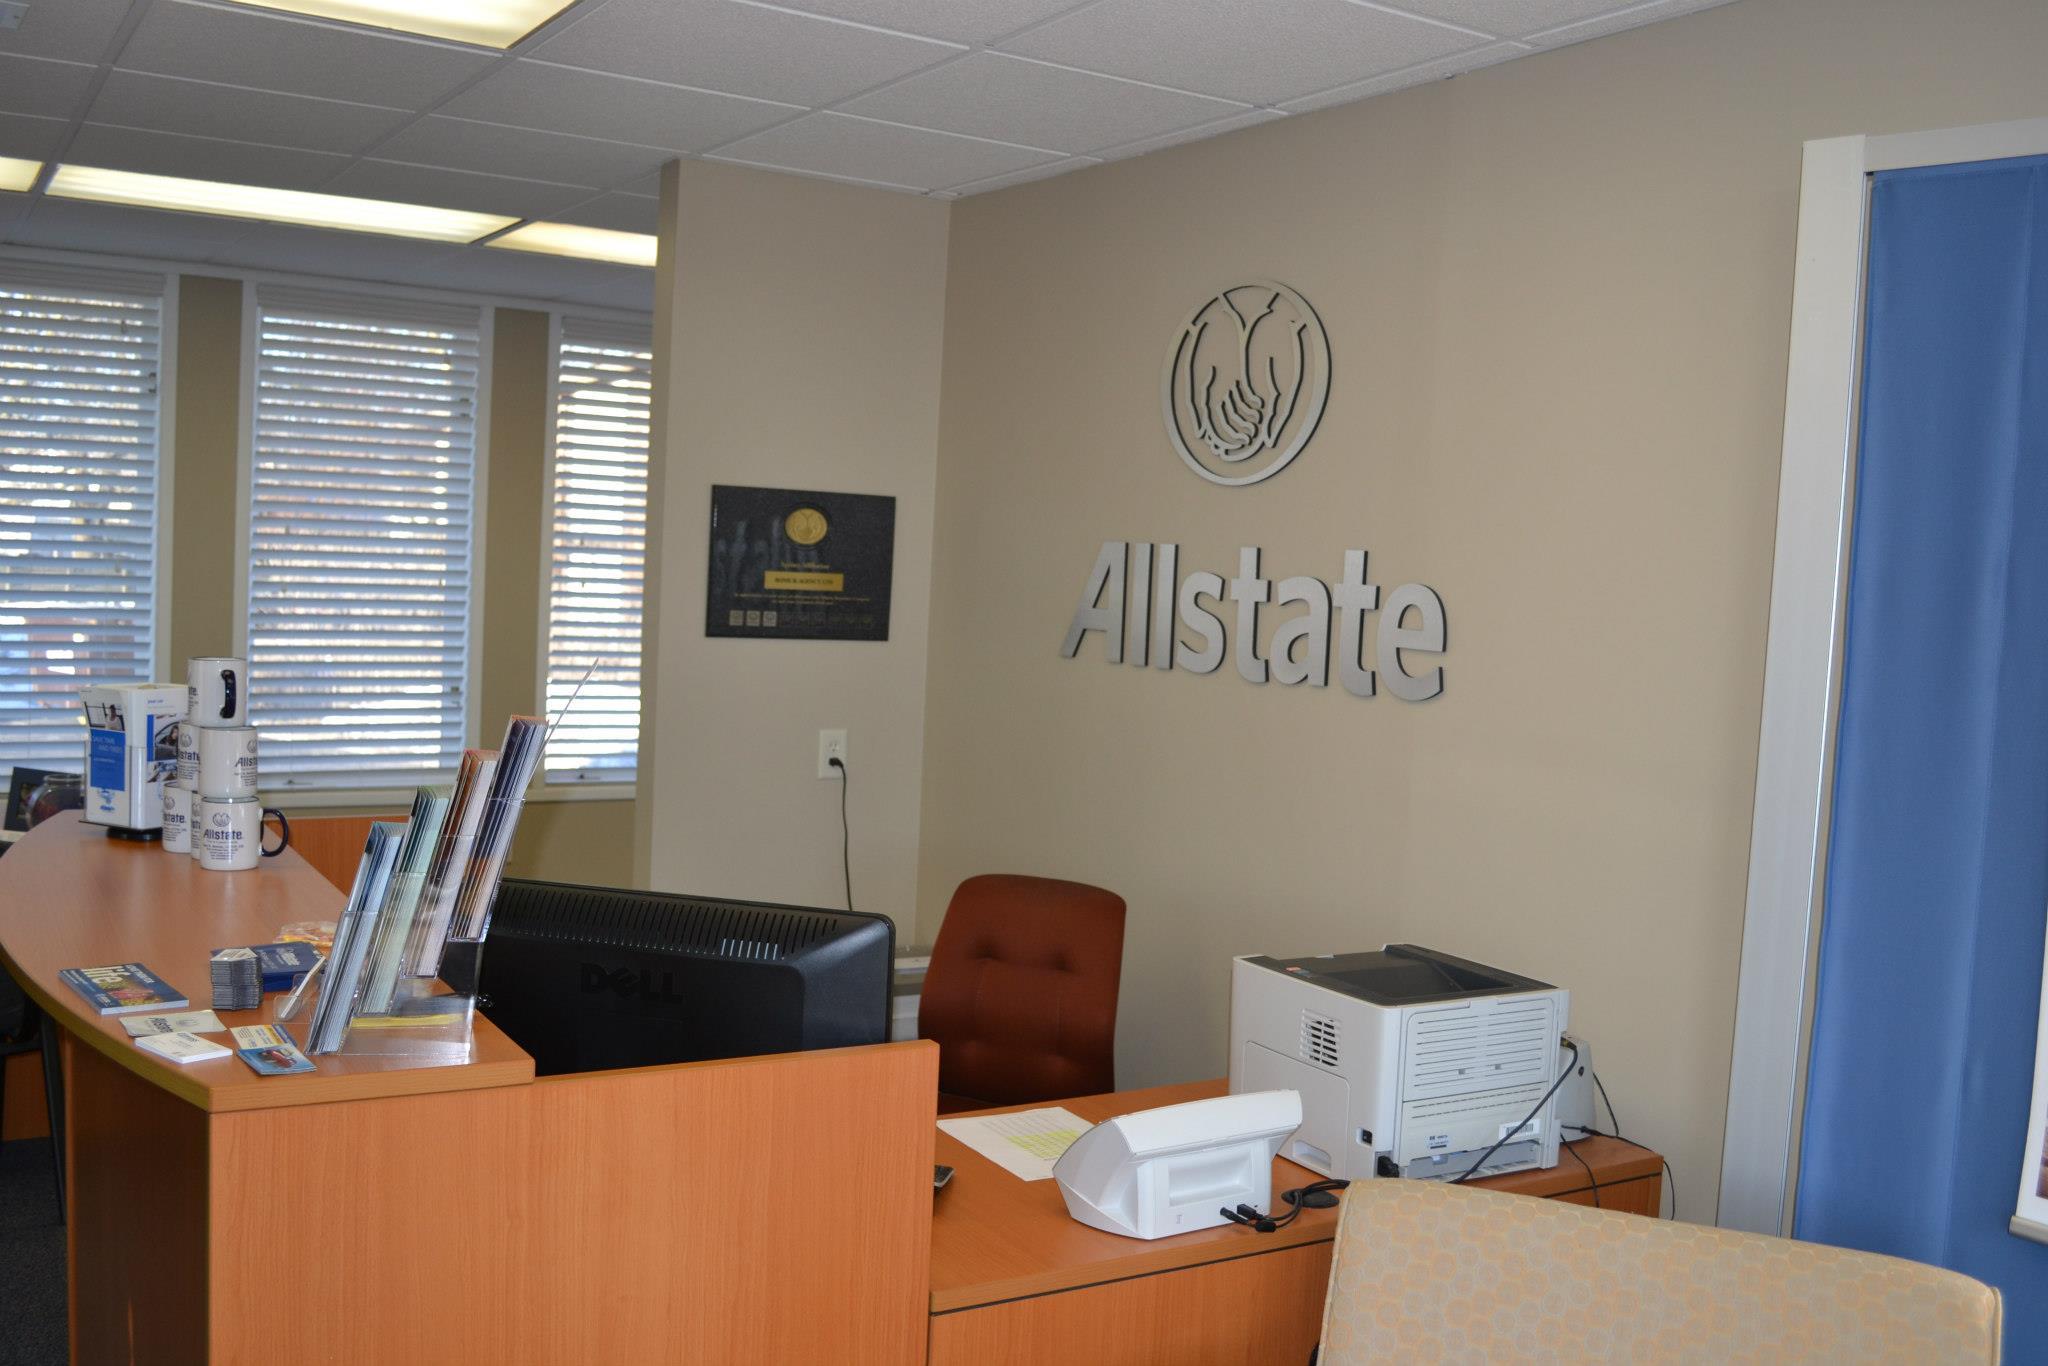 Gary Bonick: Allstate Insurance Photo